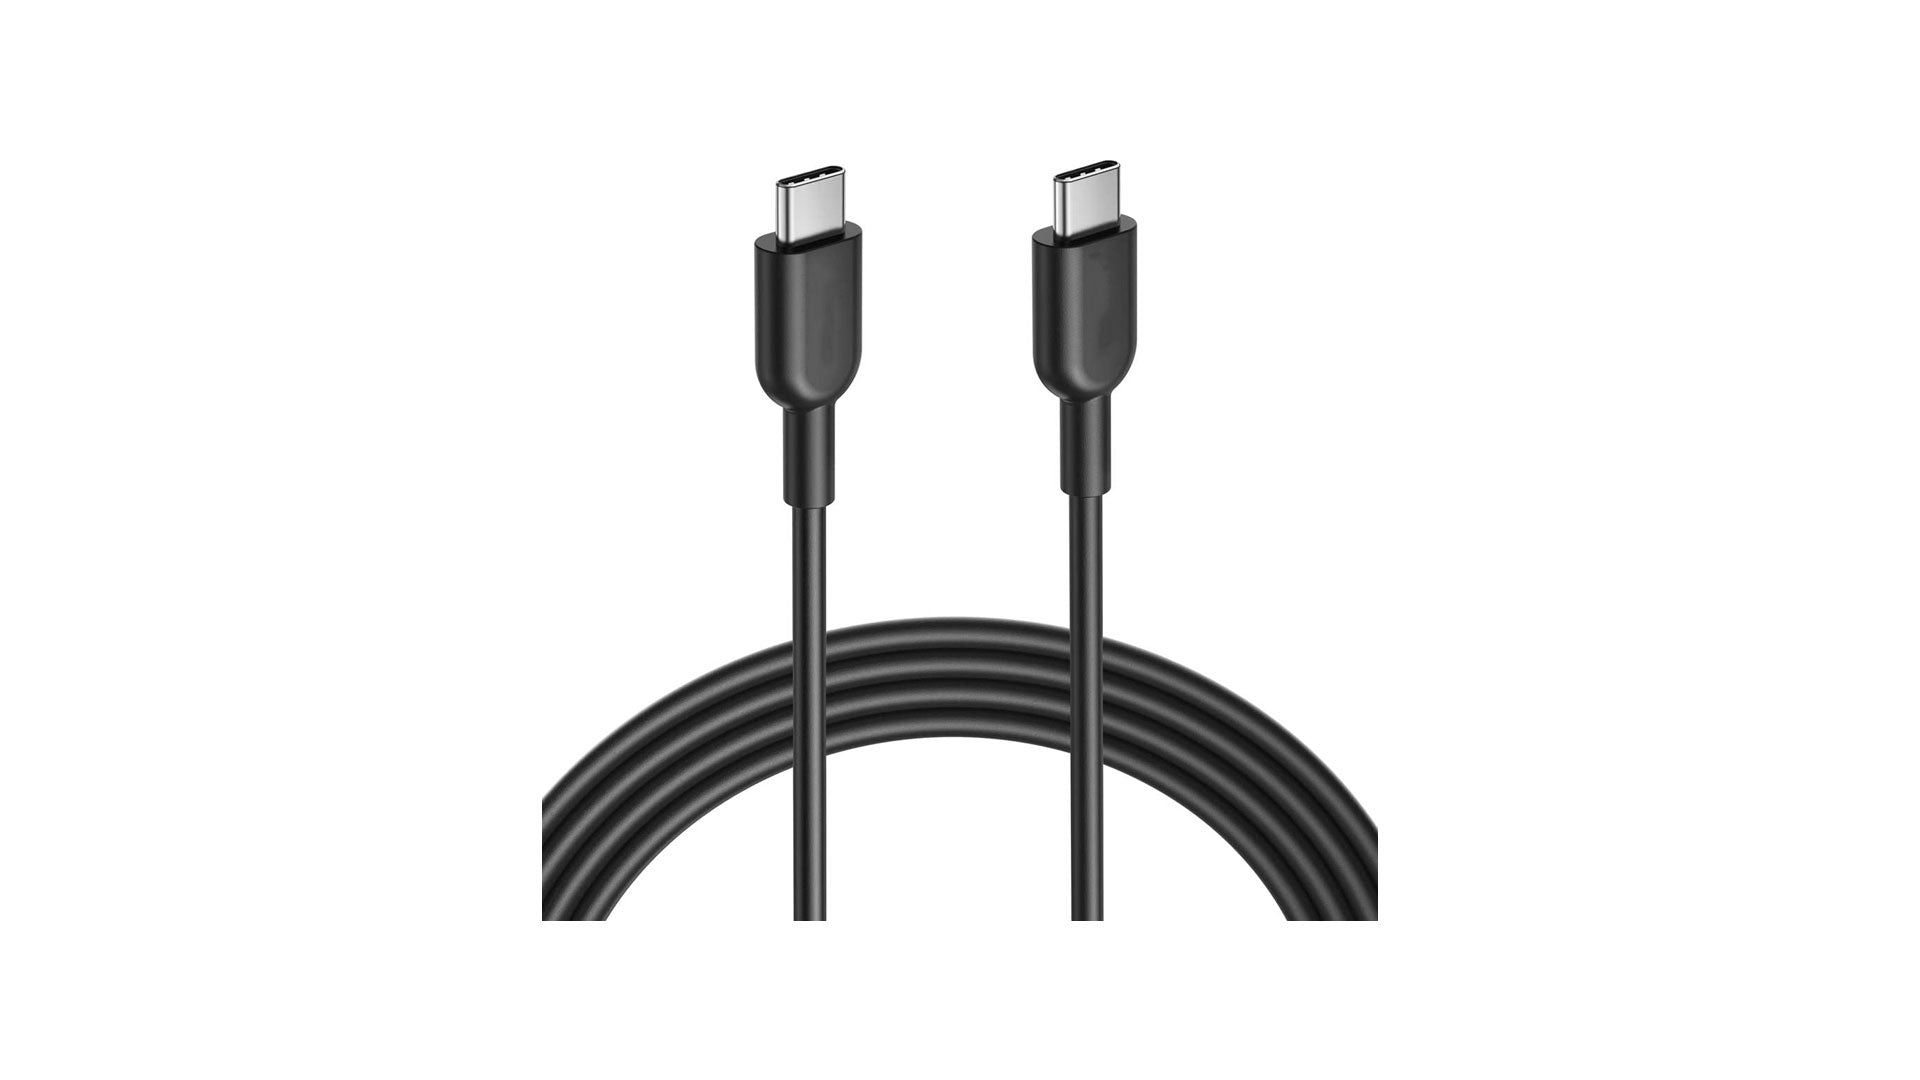 Blackmagic Cable - USB-C Zoom Focus Demand